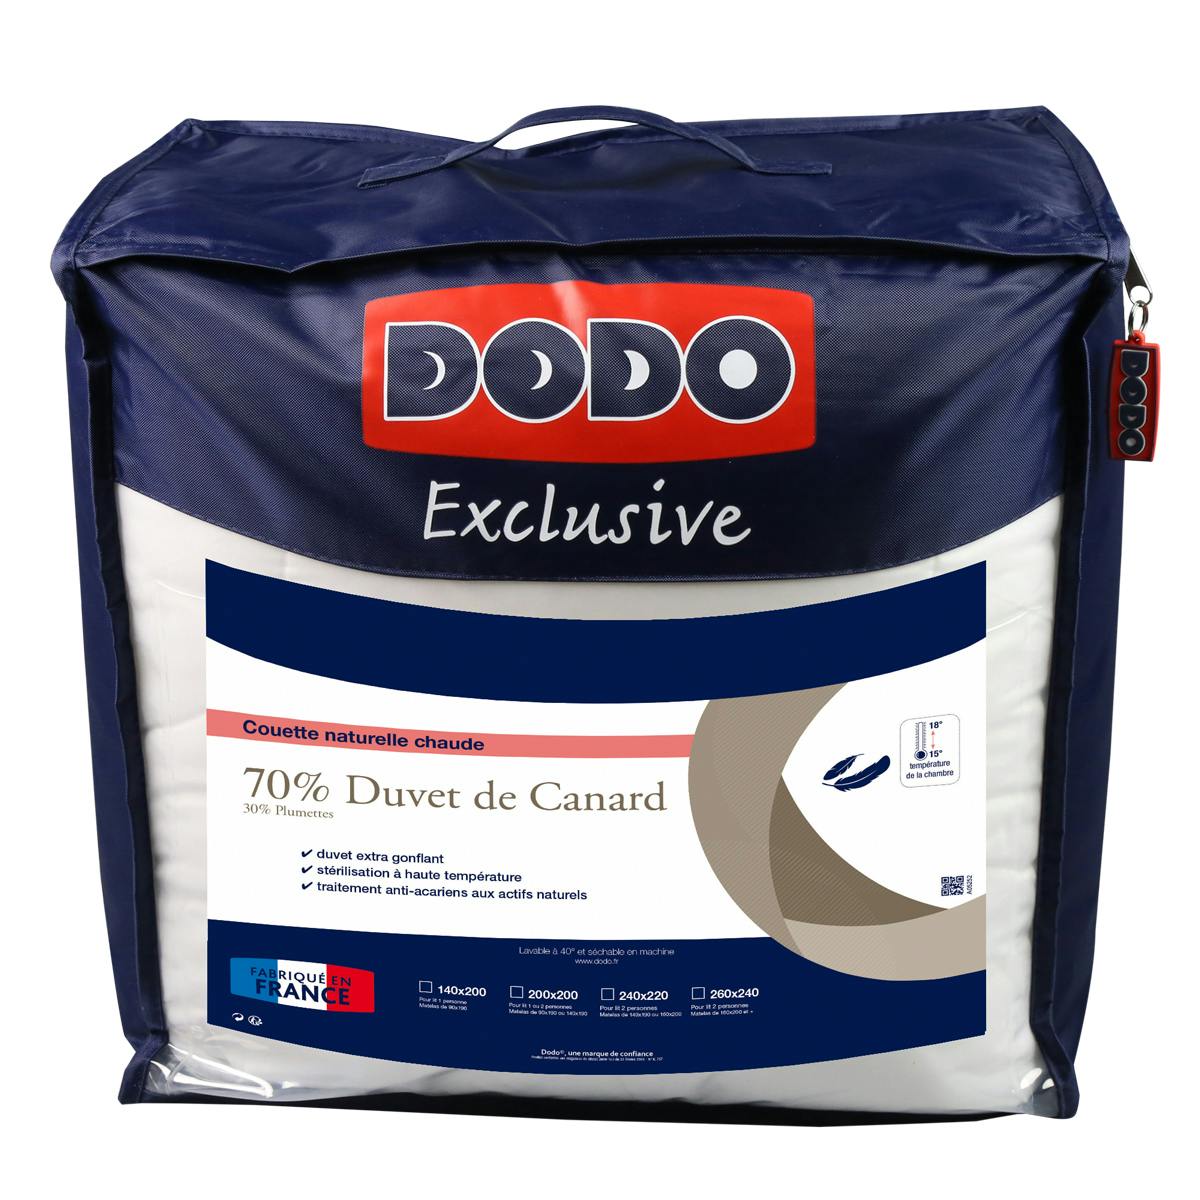 Dodo - couette 140x200 tradition chaude - 50% duvet de canard